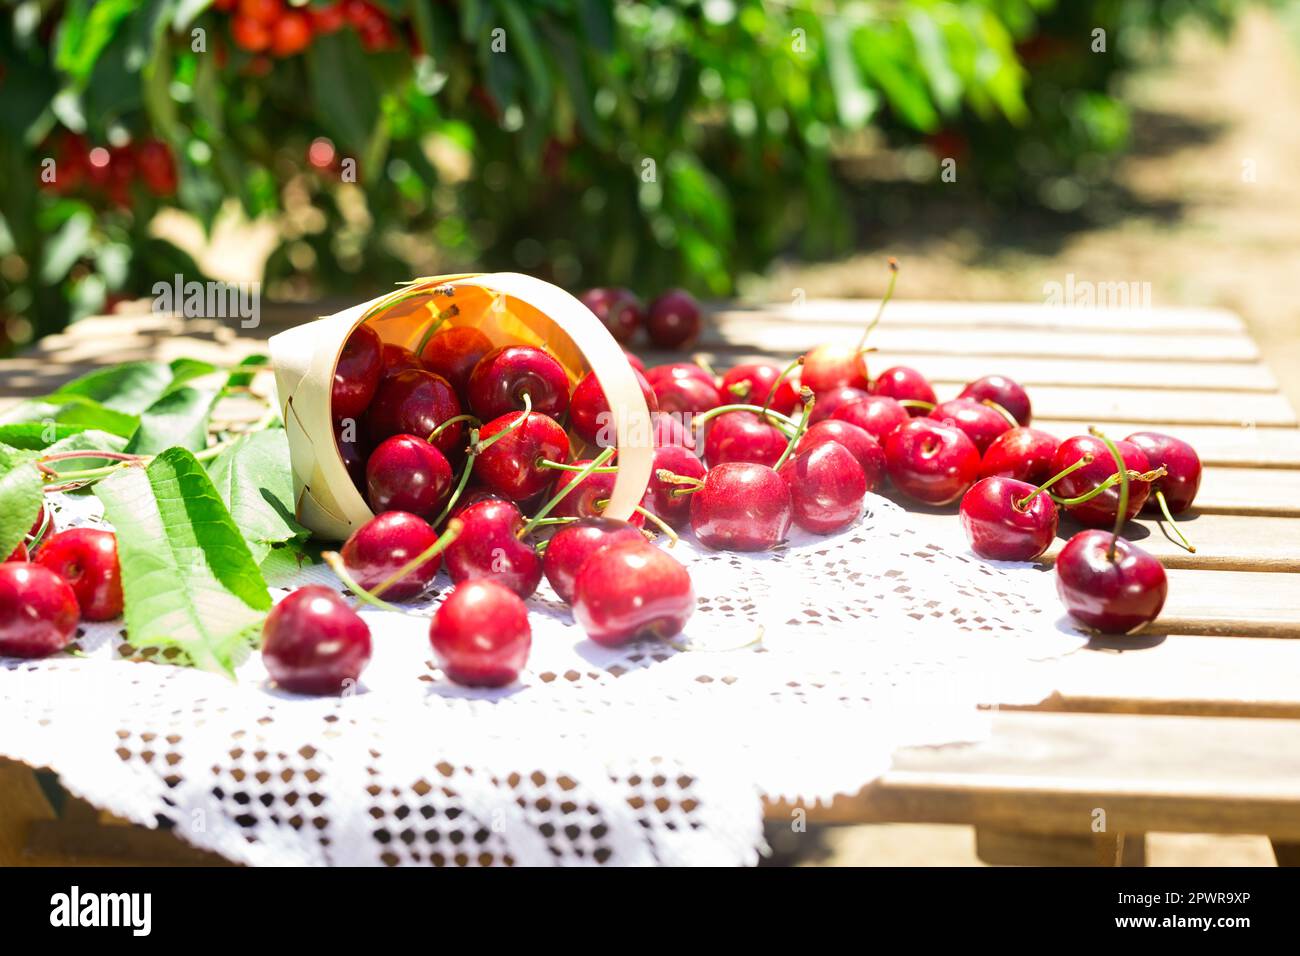 still life of cherries in wicker basket on table in garden Stock Photo